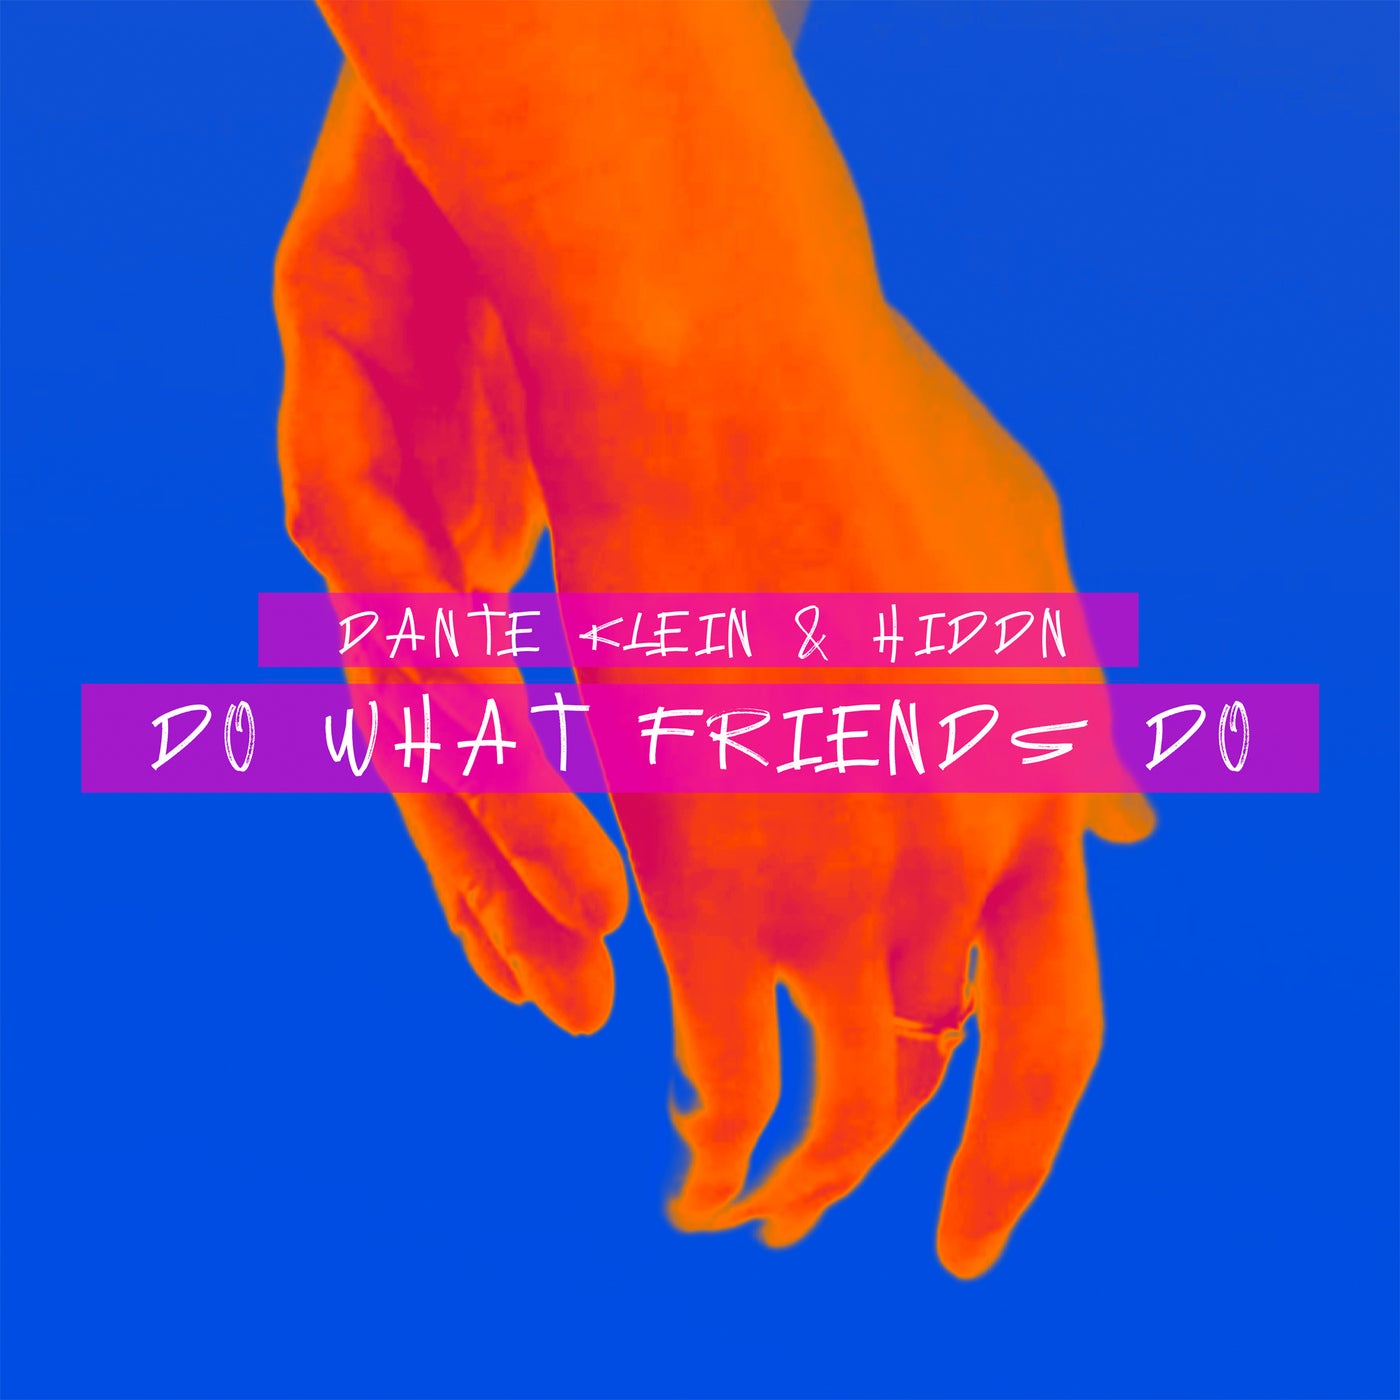 Do What Friends Do (feat. HAVENN)